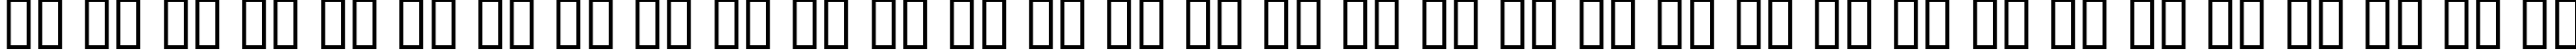 Пример написания русского алфавита шрифтом AirCut Light